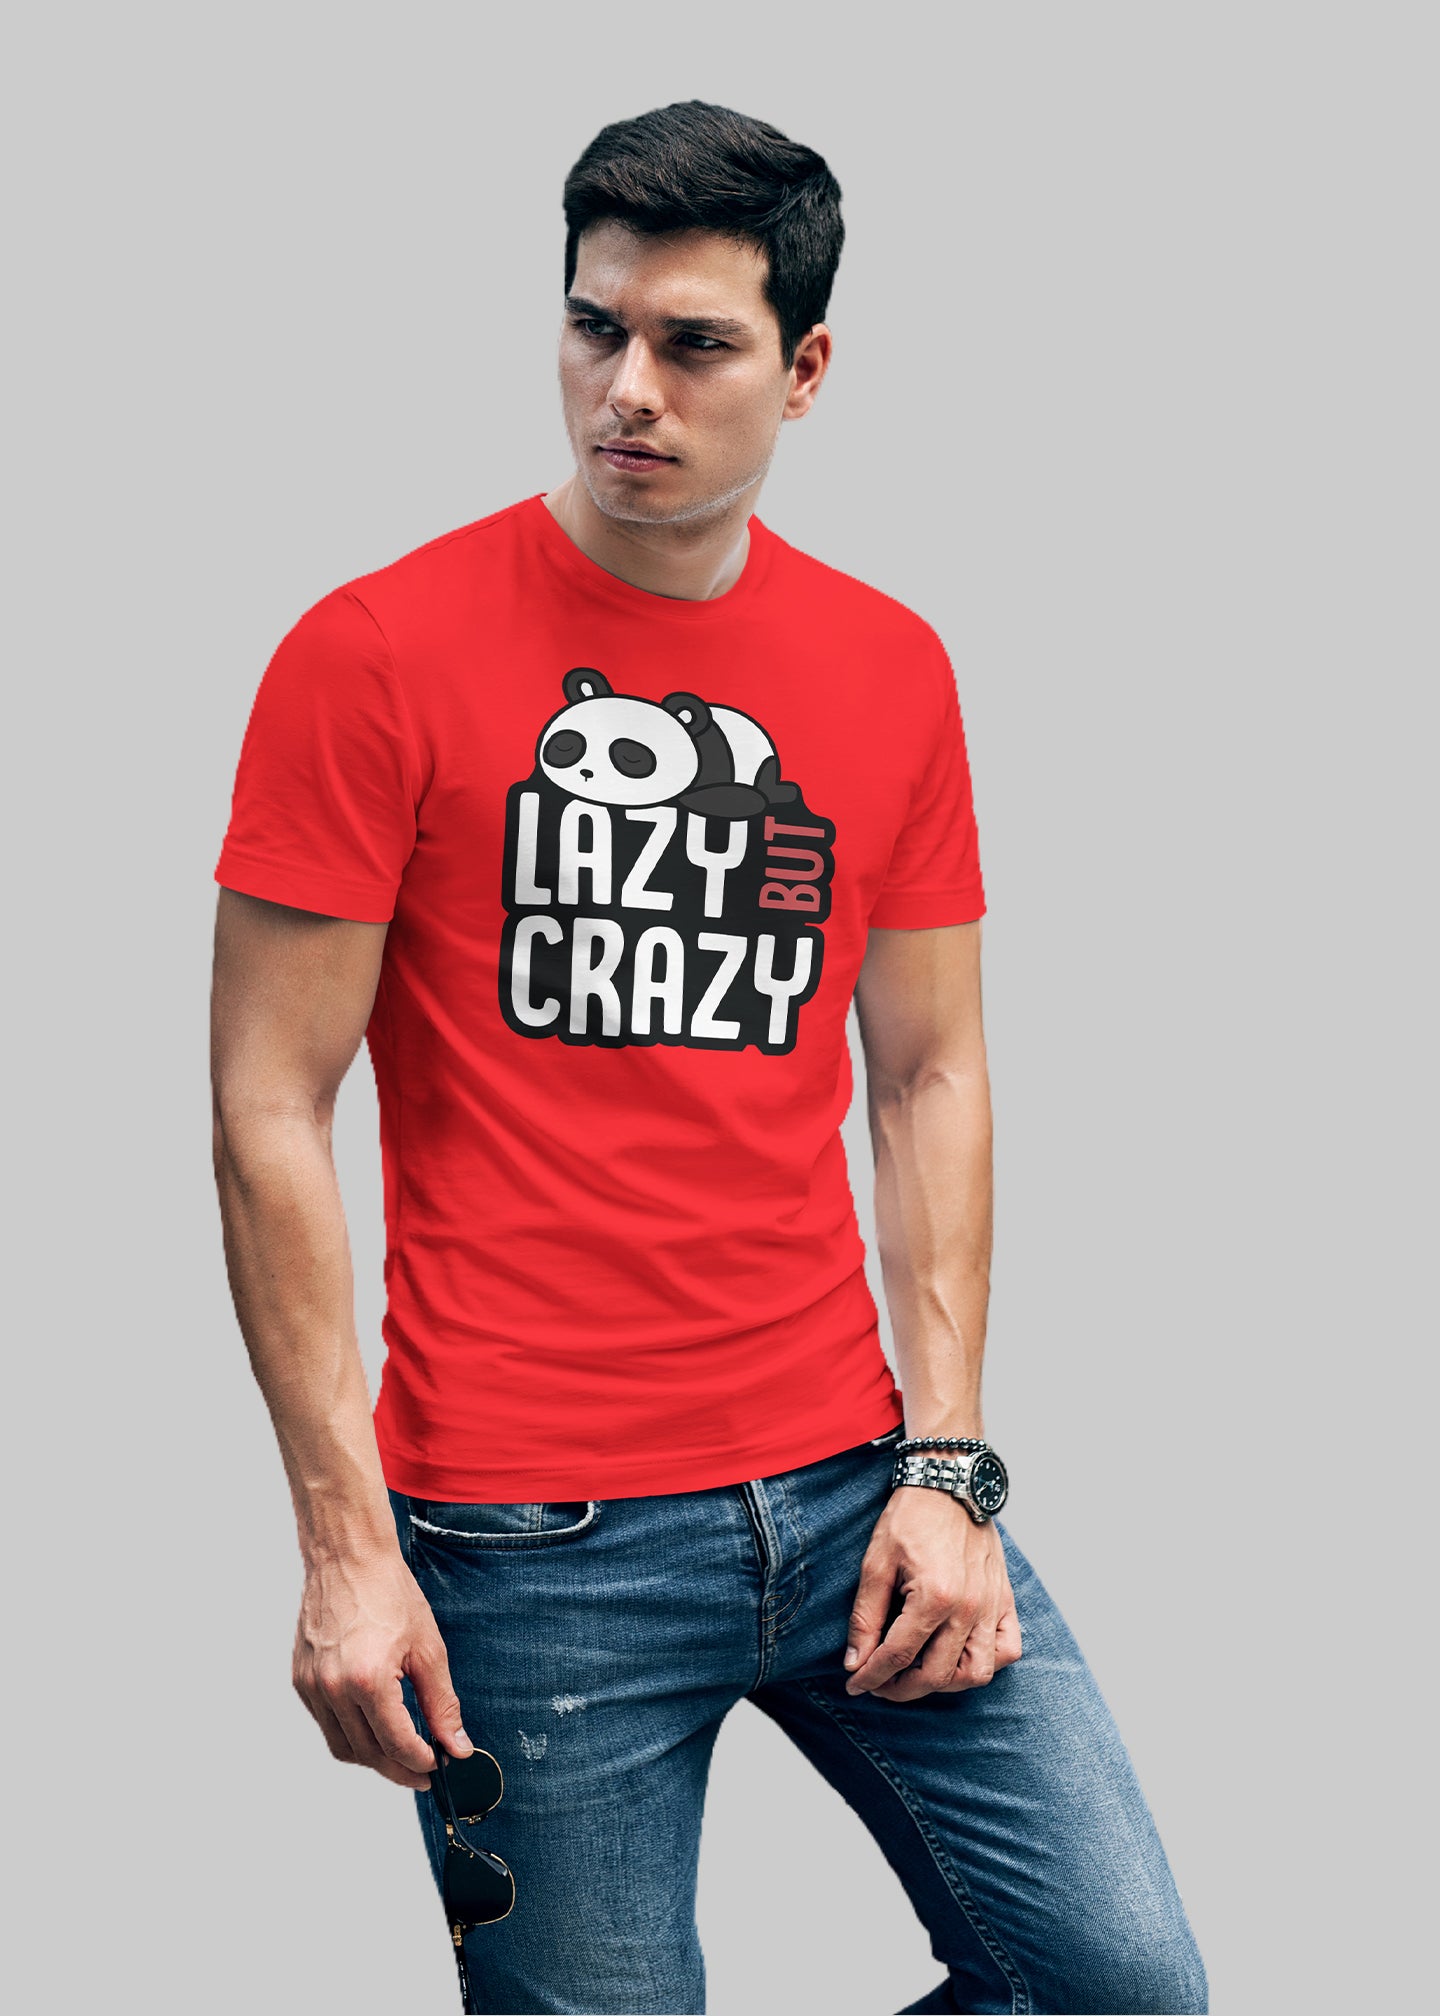 Lazy but crazy Printed Half Sleeve Premium Cotton T-shirt For Men